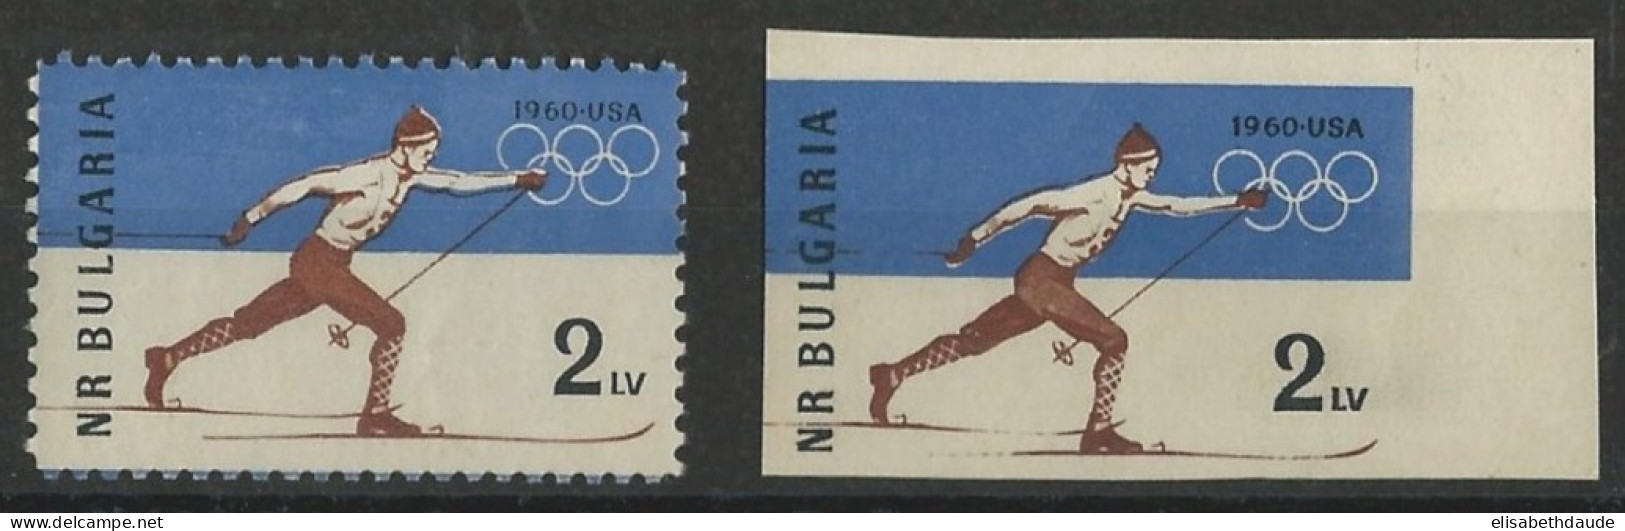 BULGARIE - 1960 - YVERT N°1006 + 1006a DENTELE + NON DENTELE ** MNH - Nuovi